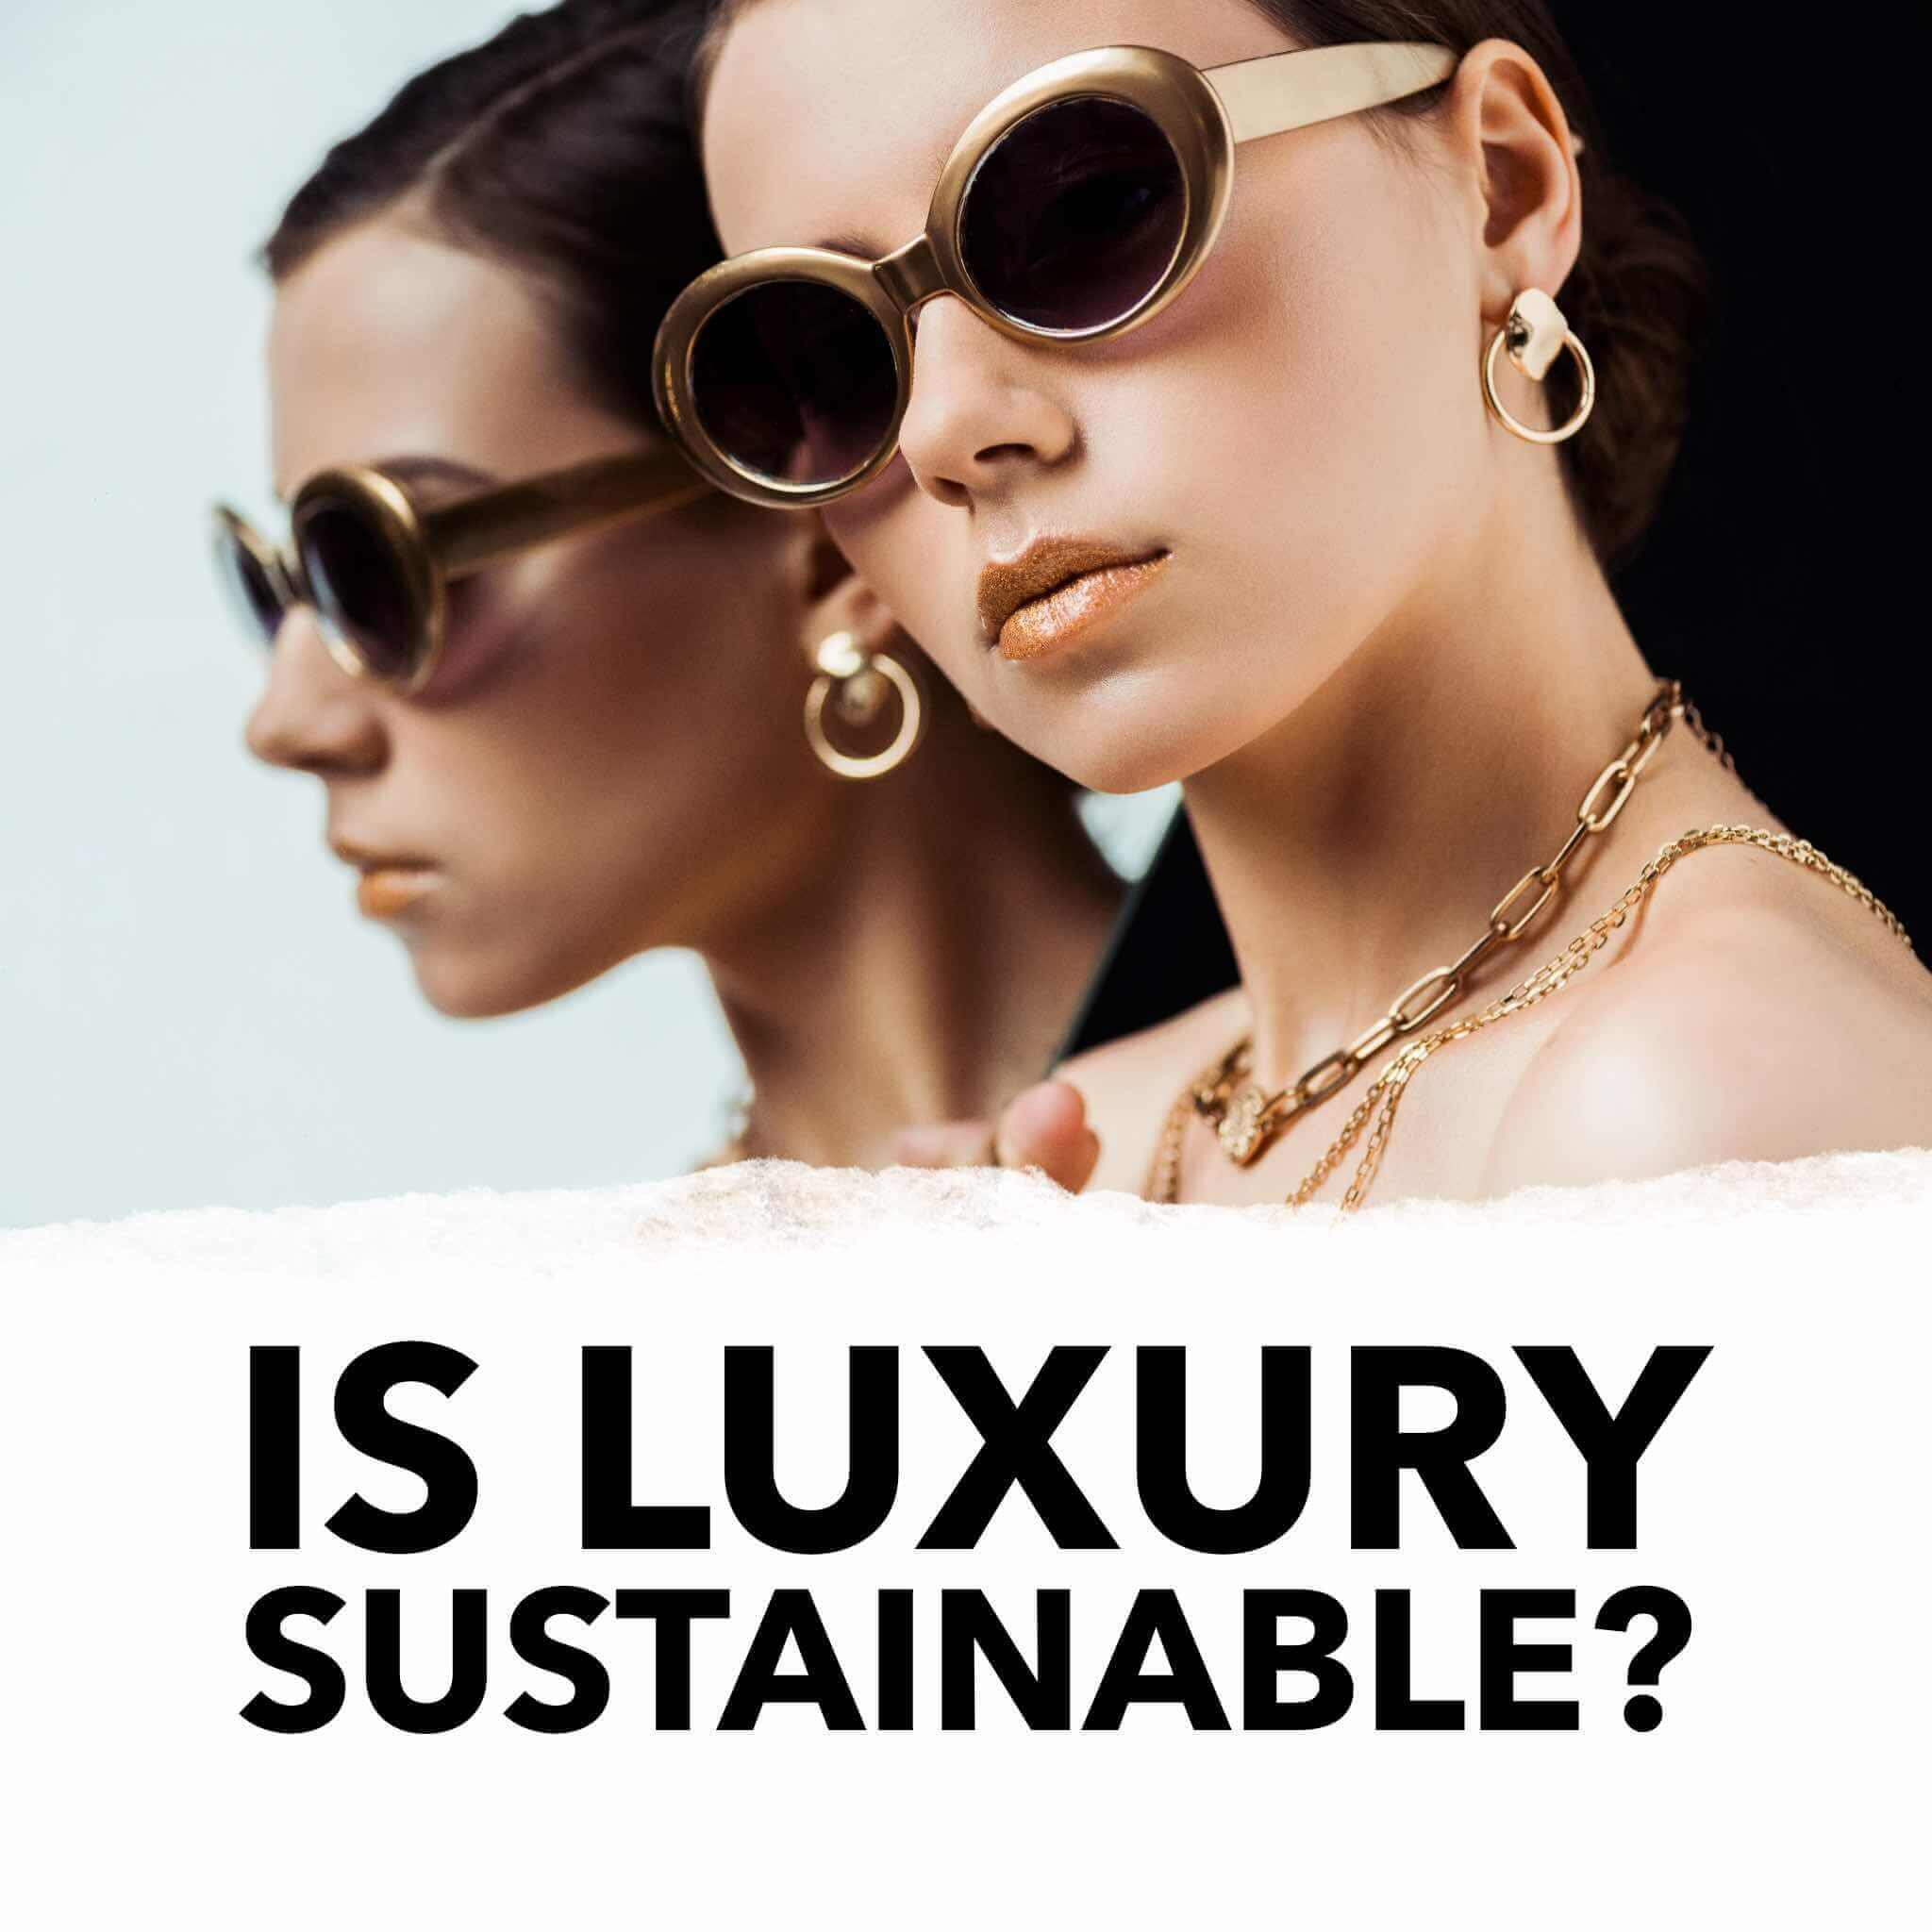 is luxury sustainable? let's discuss.